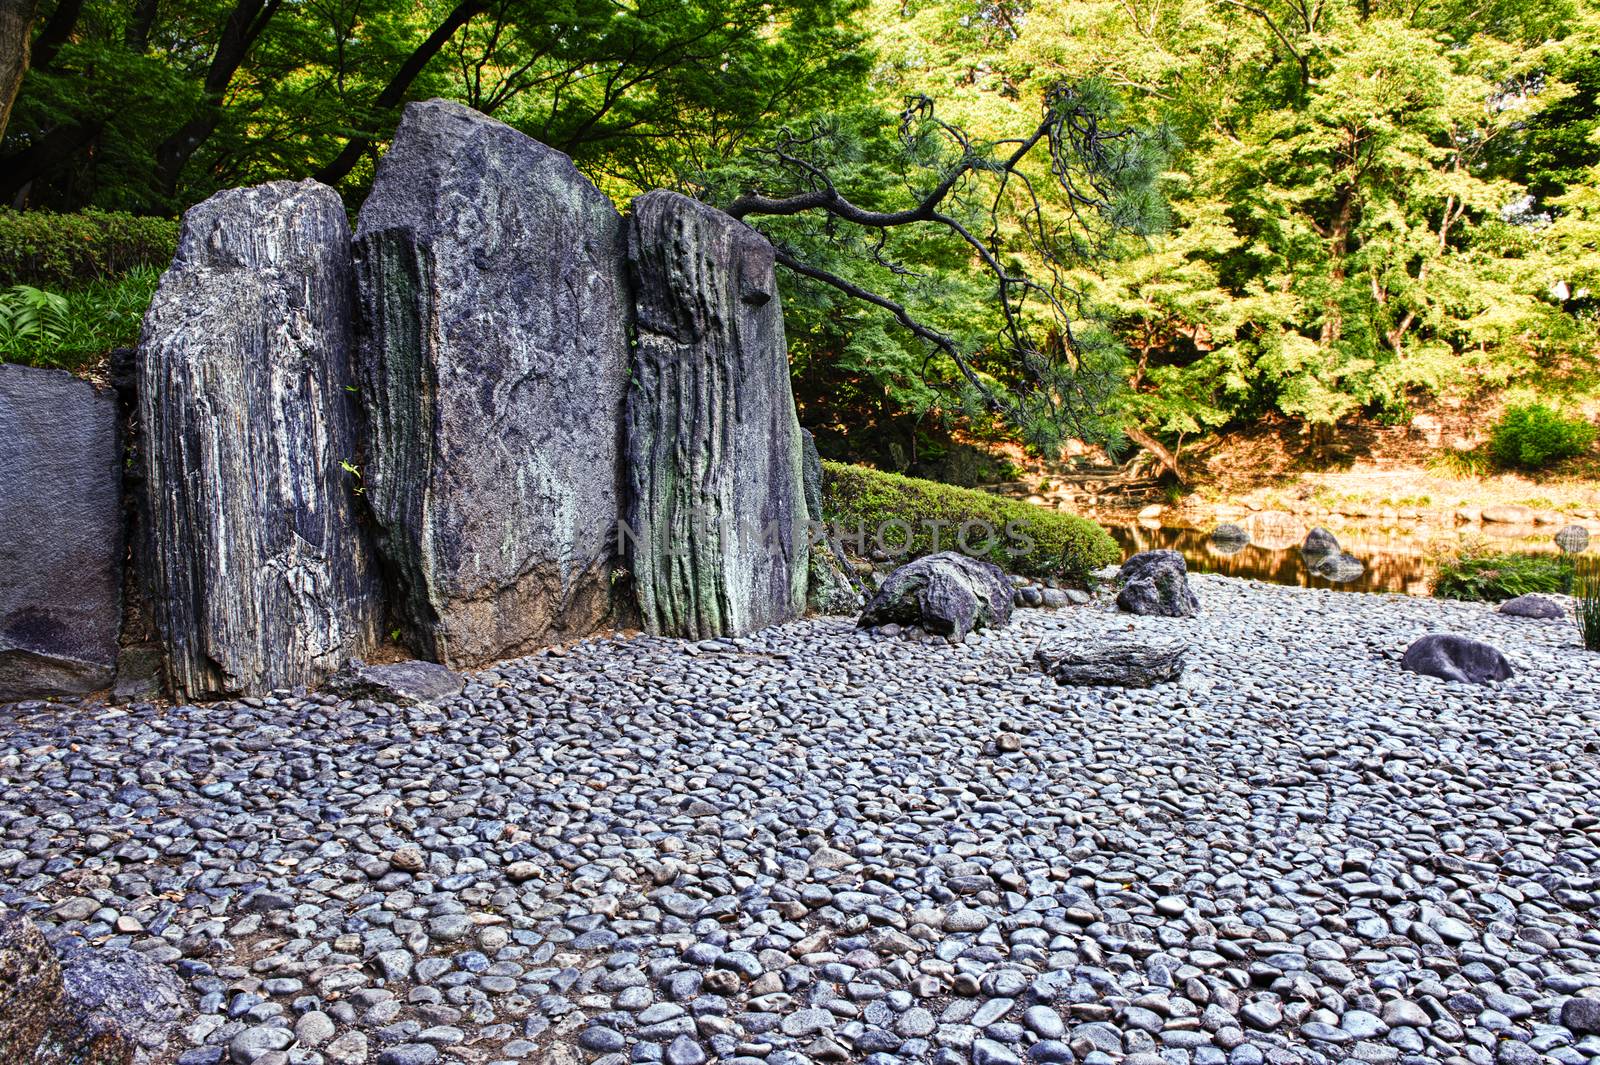 Zen stone path in a Japanese Garden Korakuen. Koishikawa Korakuen is one of oldest Japanese gardens in Tokyo. Japan, HDR